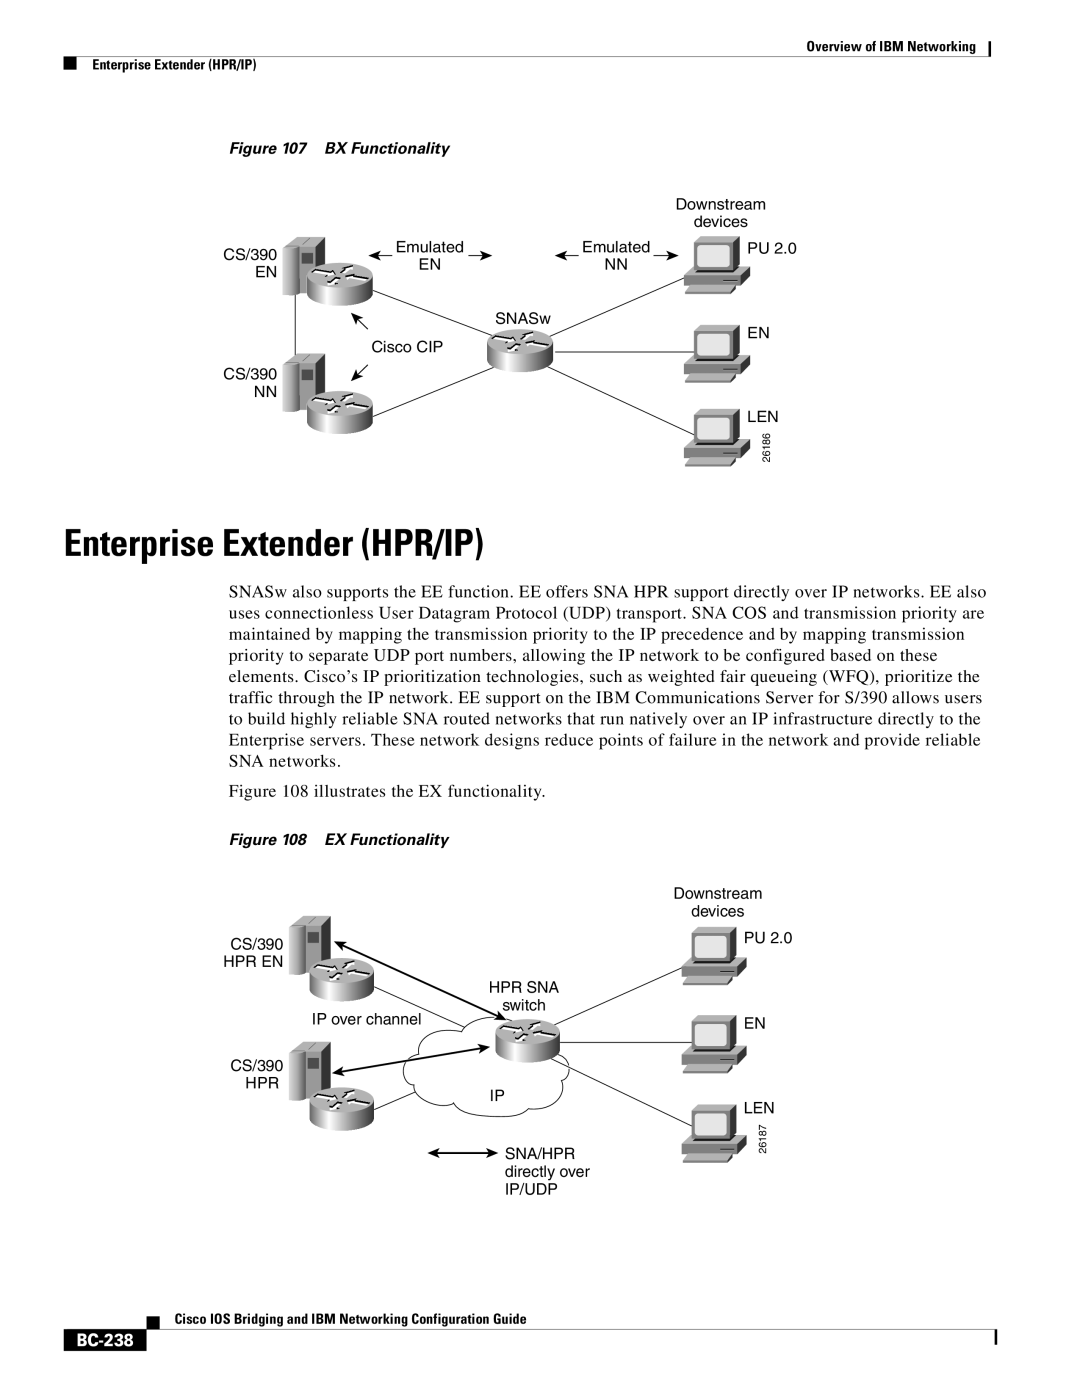 IBM BC-203 manual Enterprise Extender HPR/IP, BC-238 